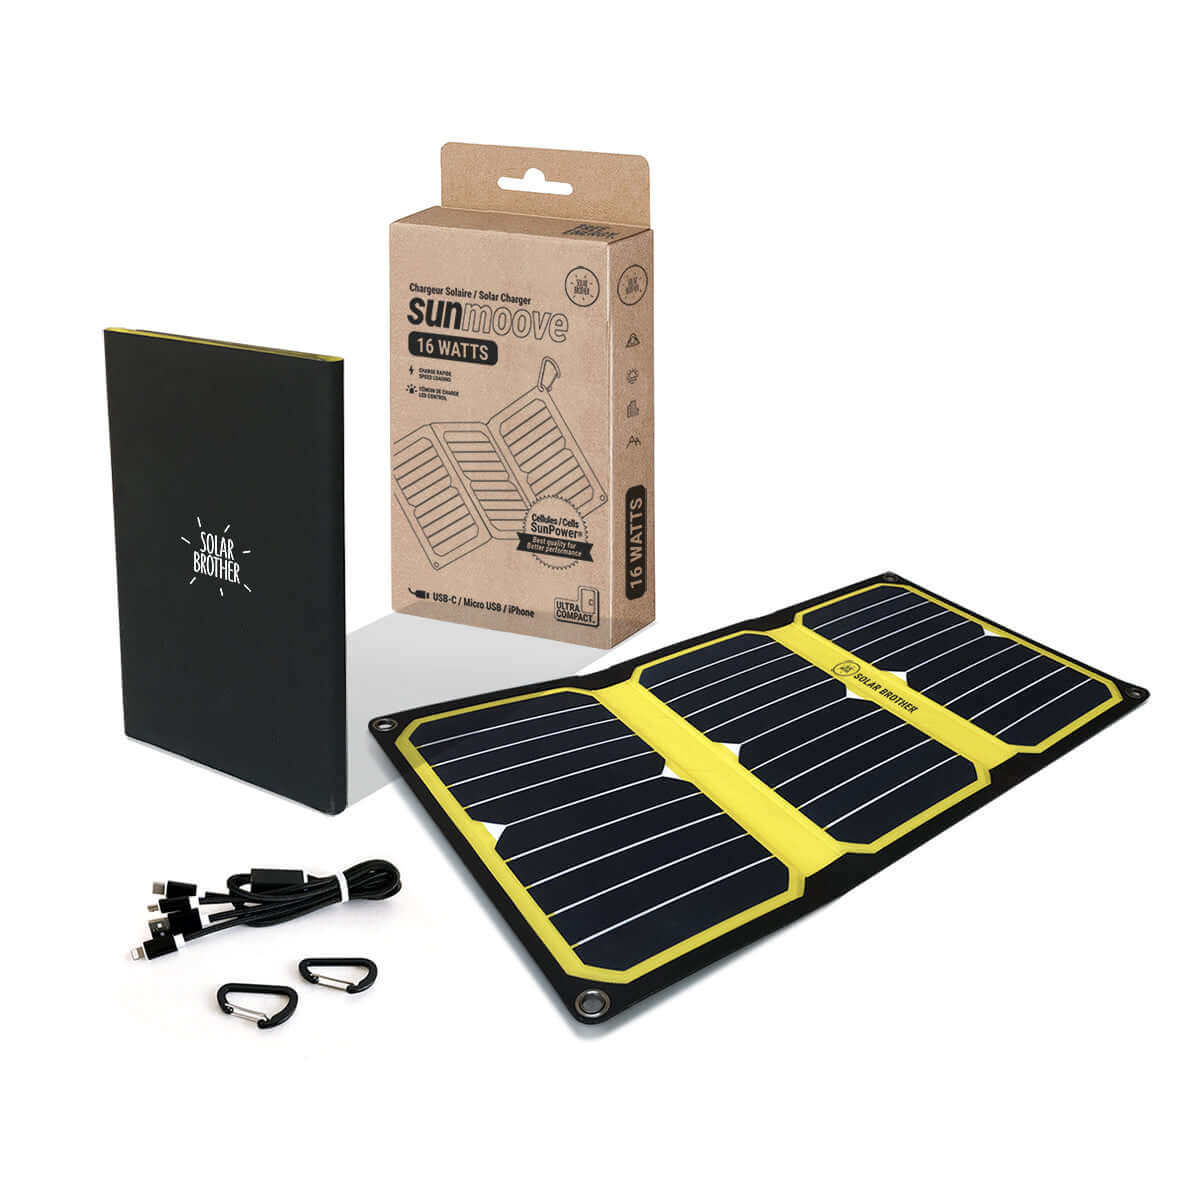 Caricabatterie solare SUNMOOVE da 16 Watt